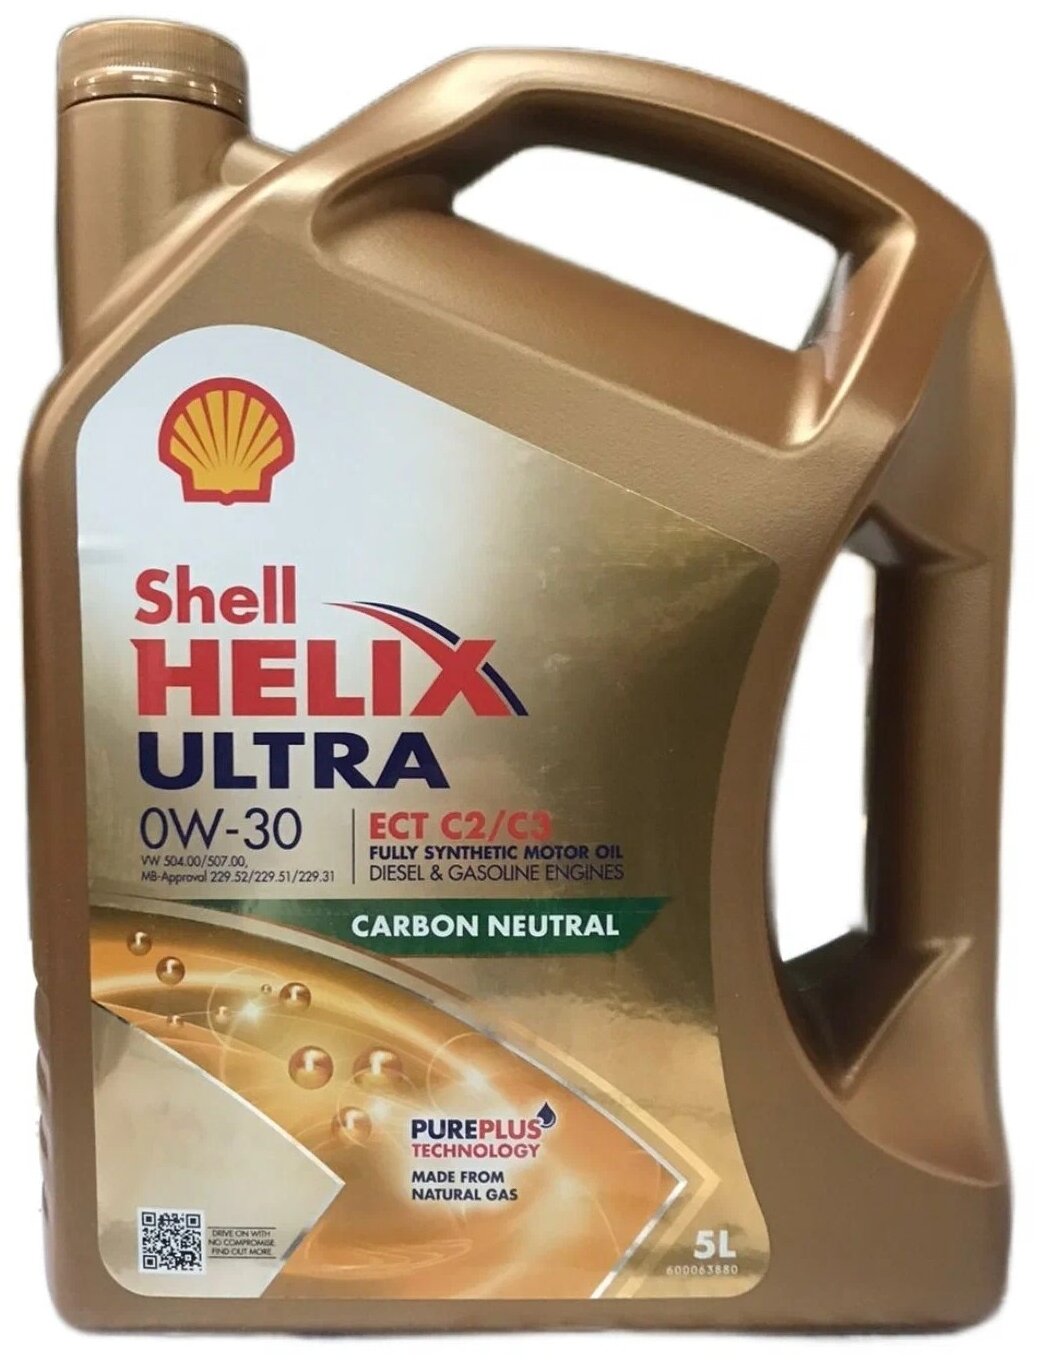 SHELL Helix Ultra ECT C2/C3 0W30 5л 550046307